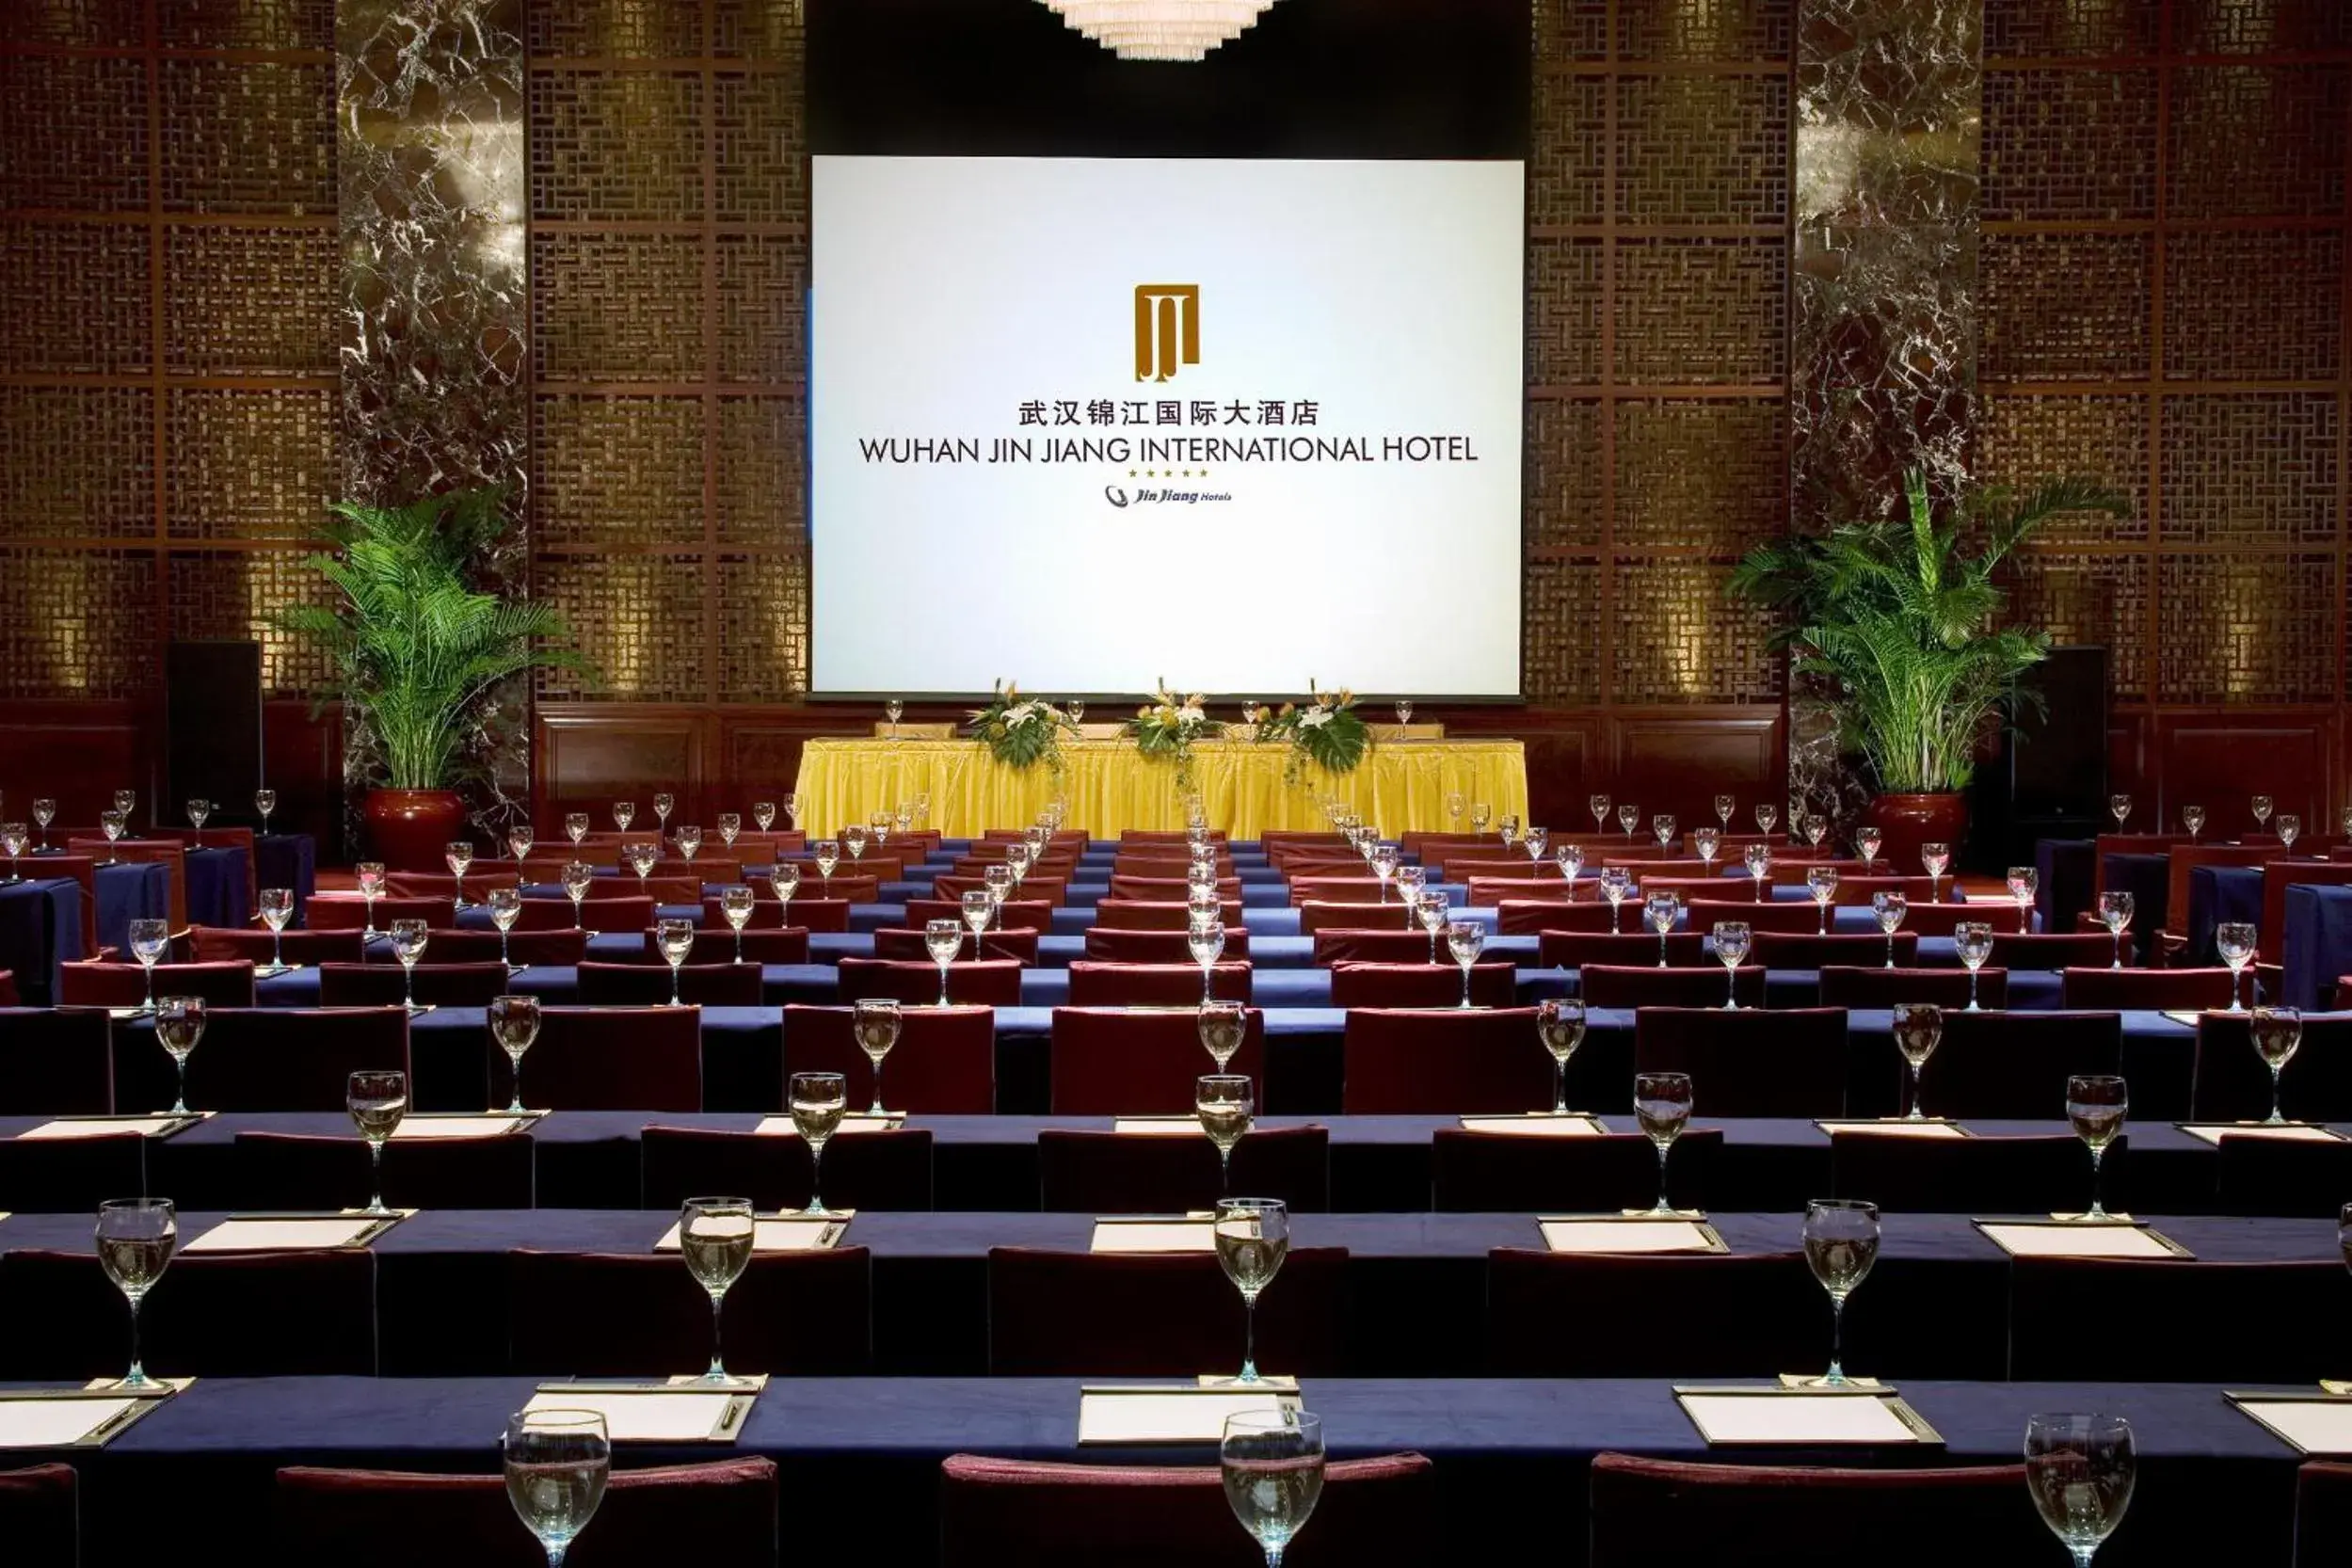 Meeting/conference room in Wuhan Jin Jiang International Hotel